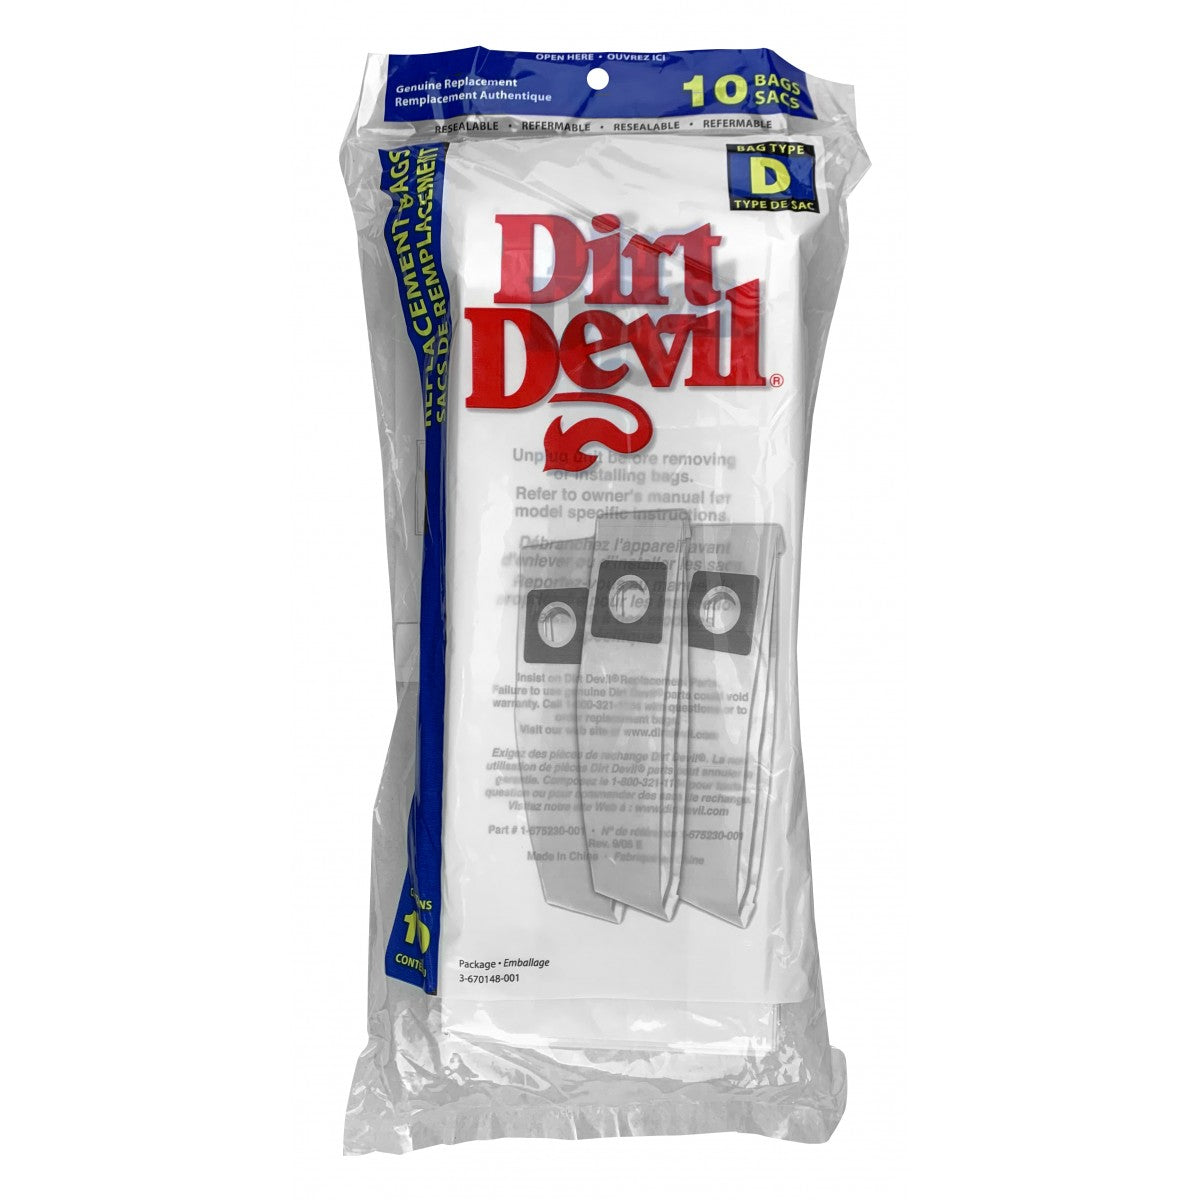 Genuine Replacement Bag for Dirt Devil Upright Vacuum - D Type Bag